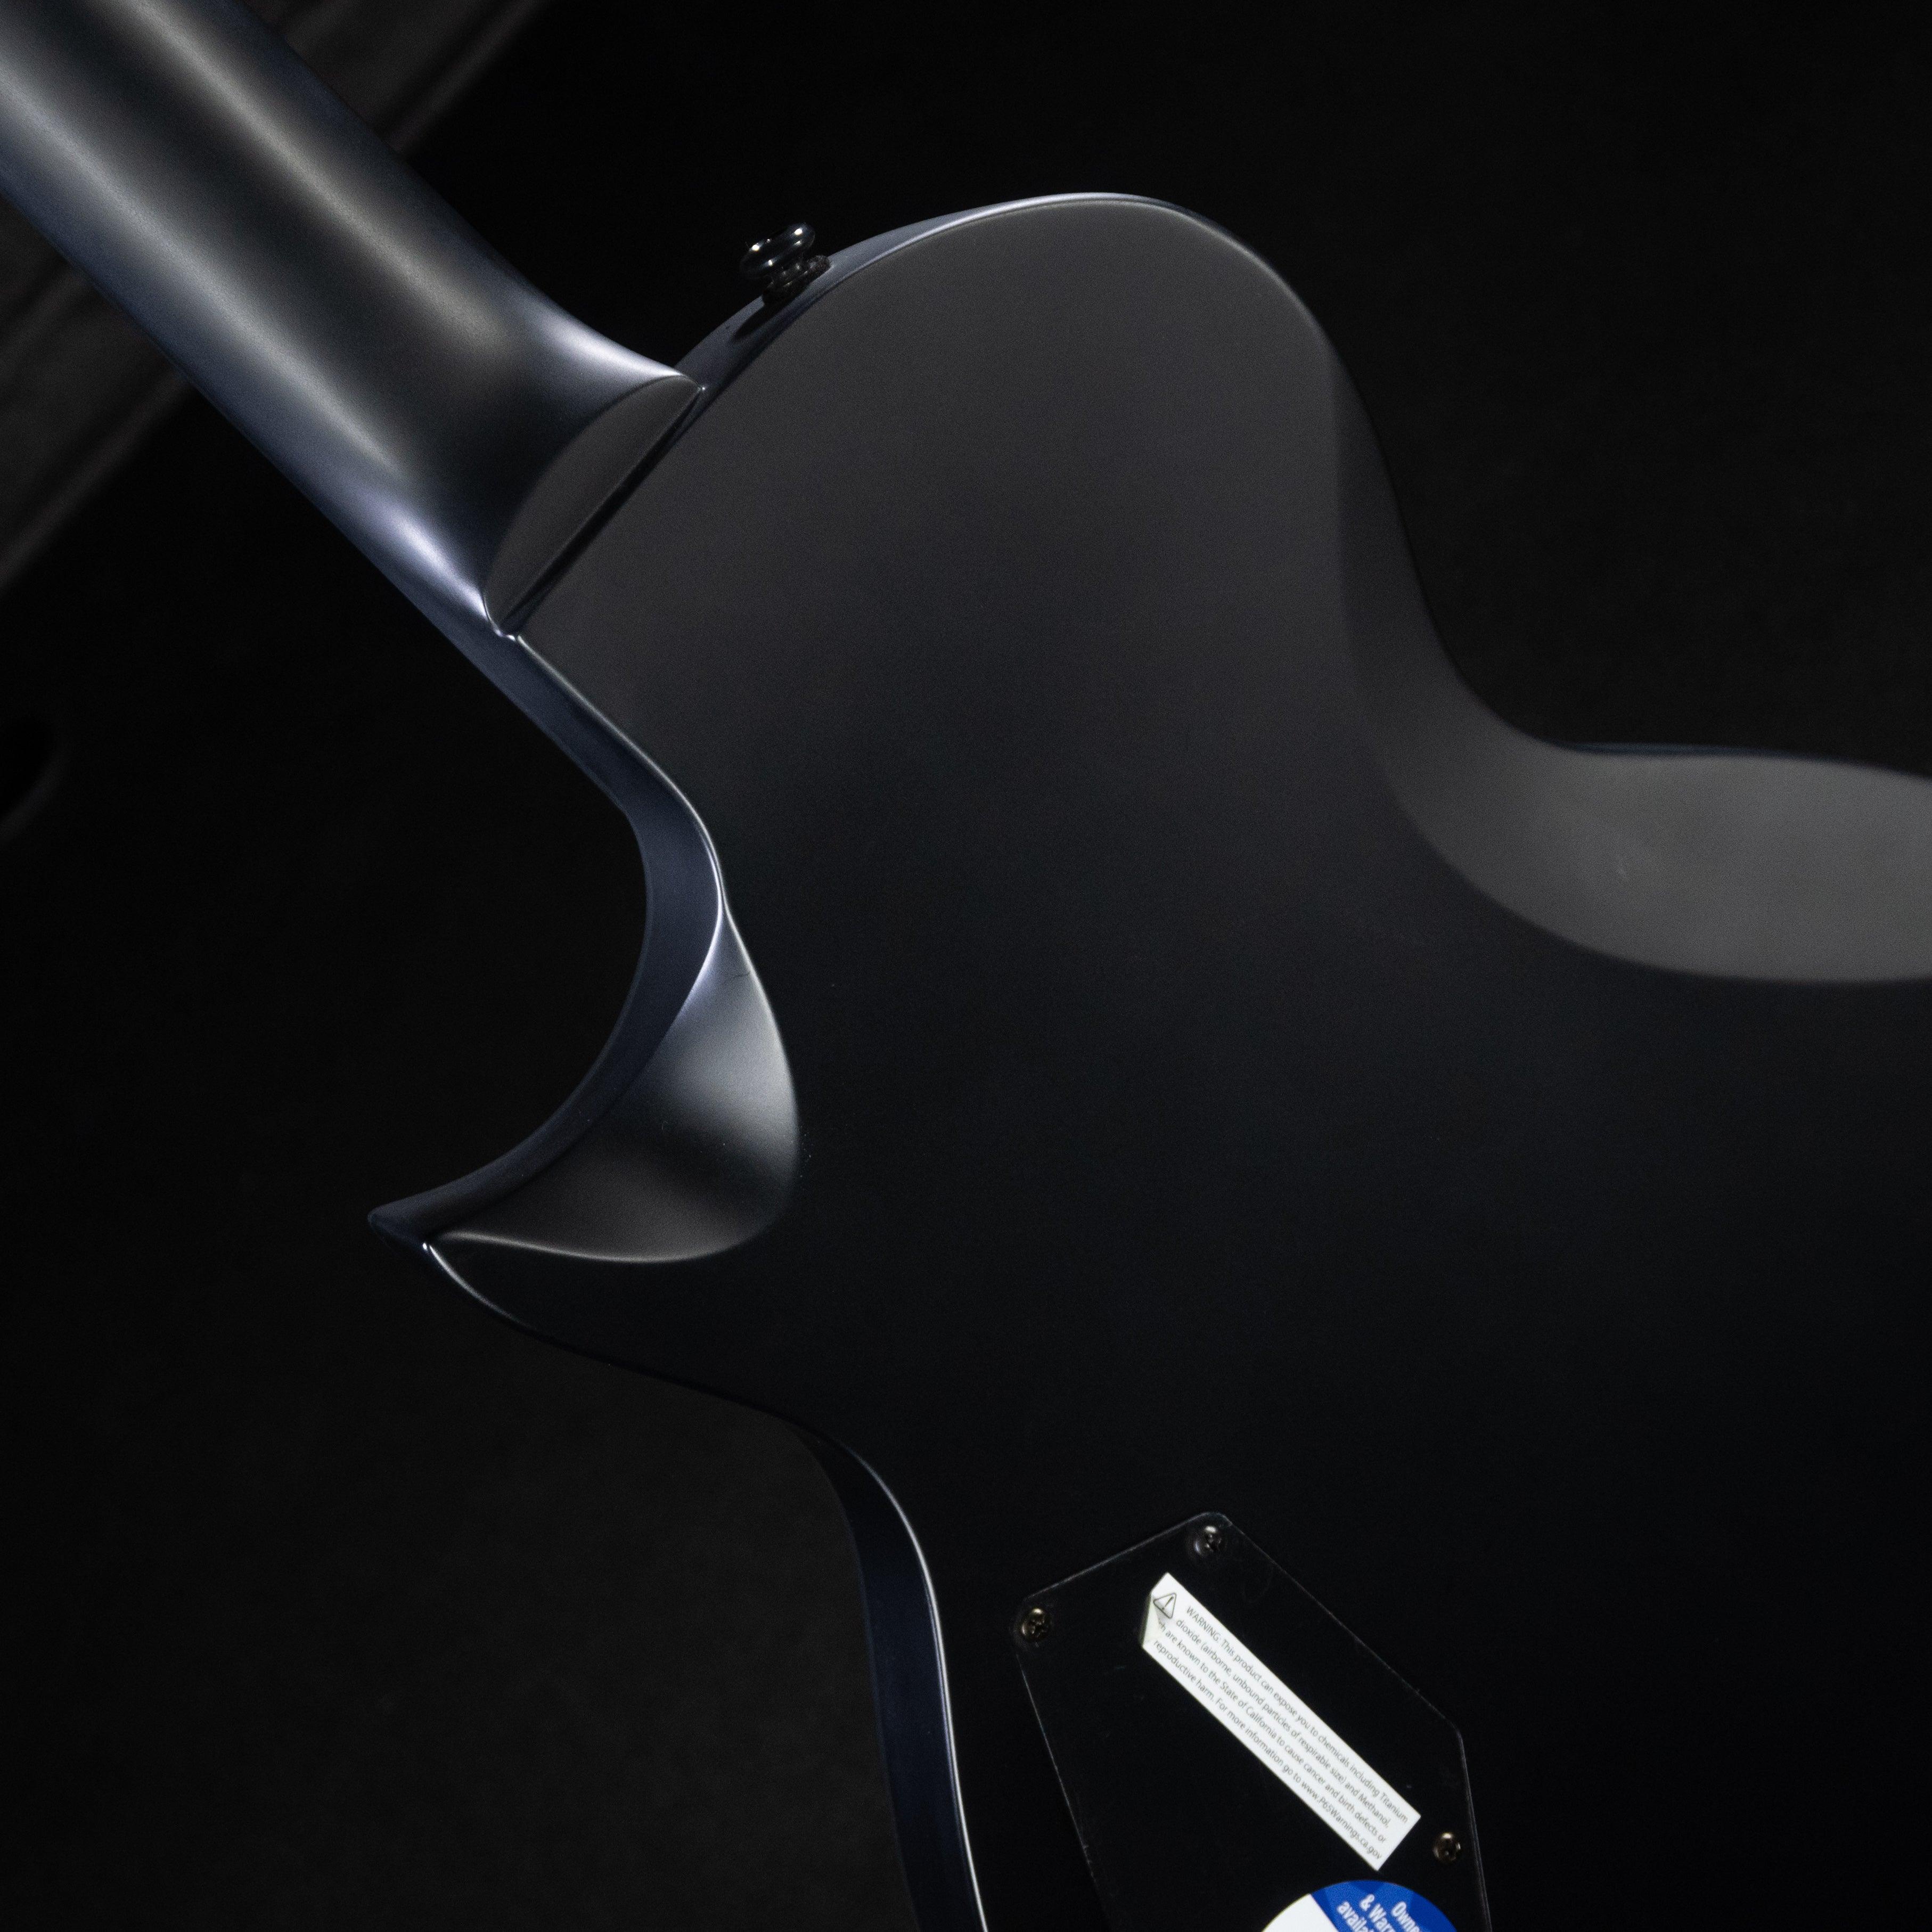 ESP LTD EC-201 Electric Guitar (Black Satin) - Impulse Music Co.